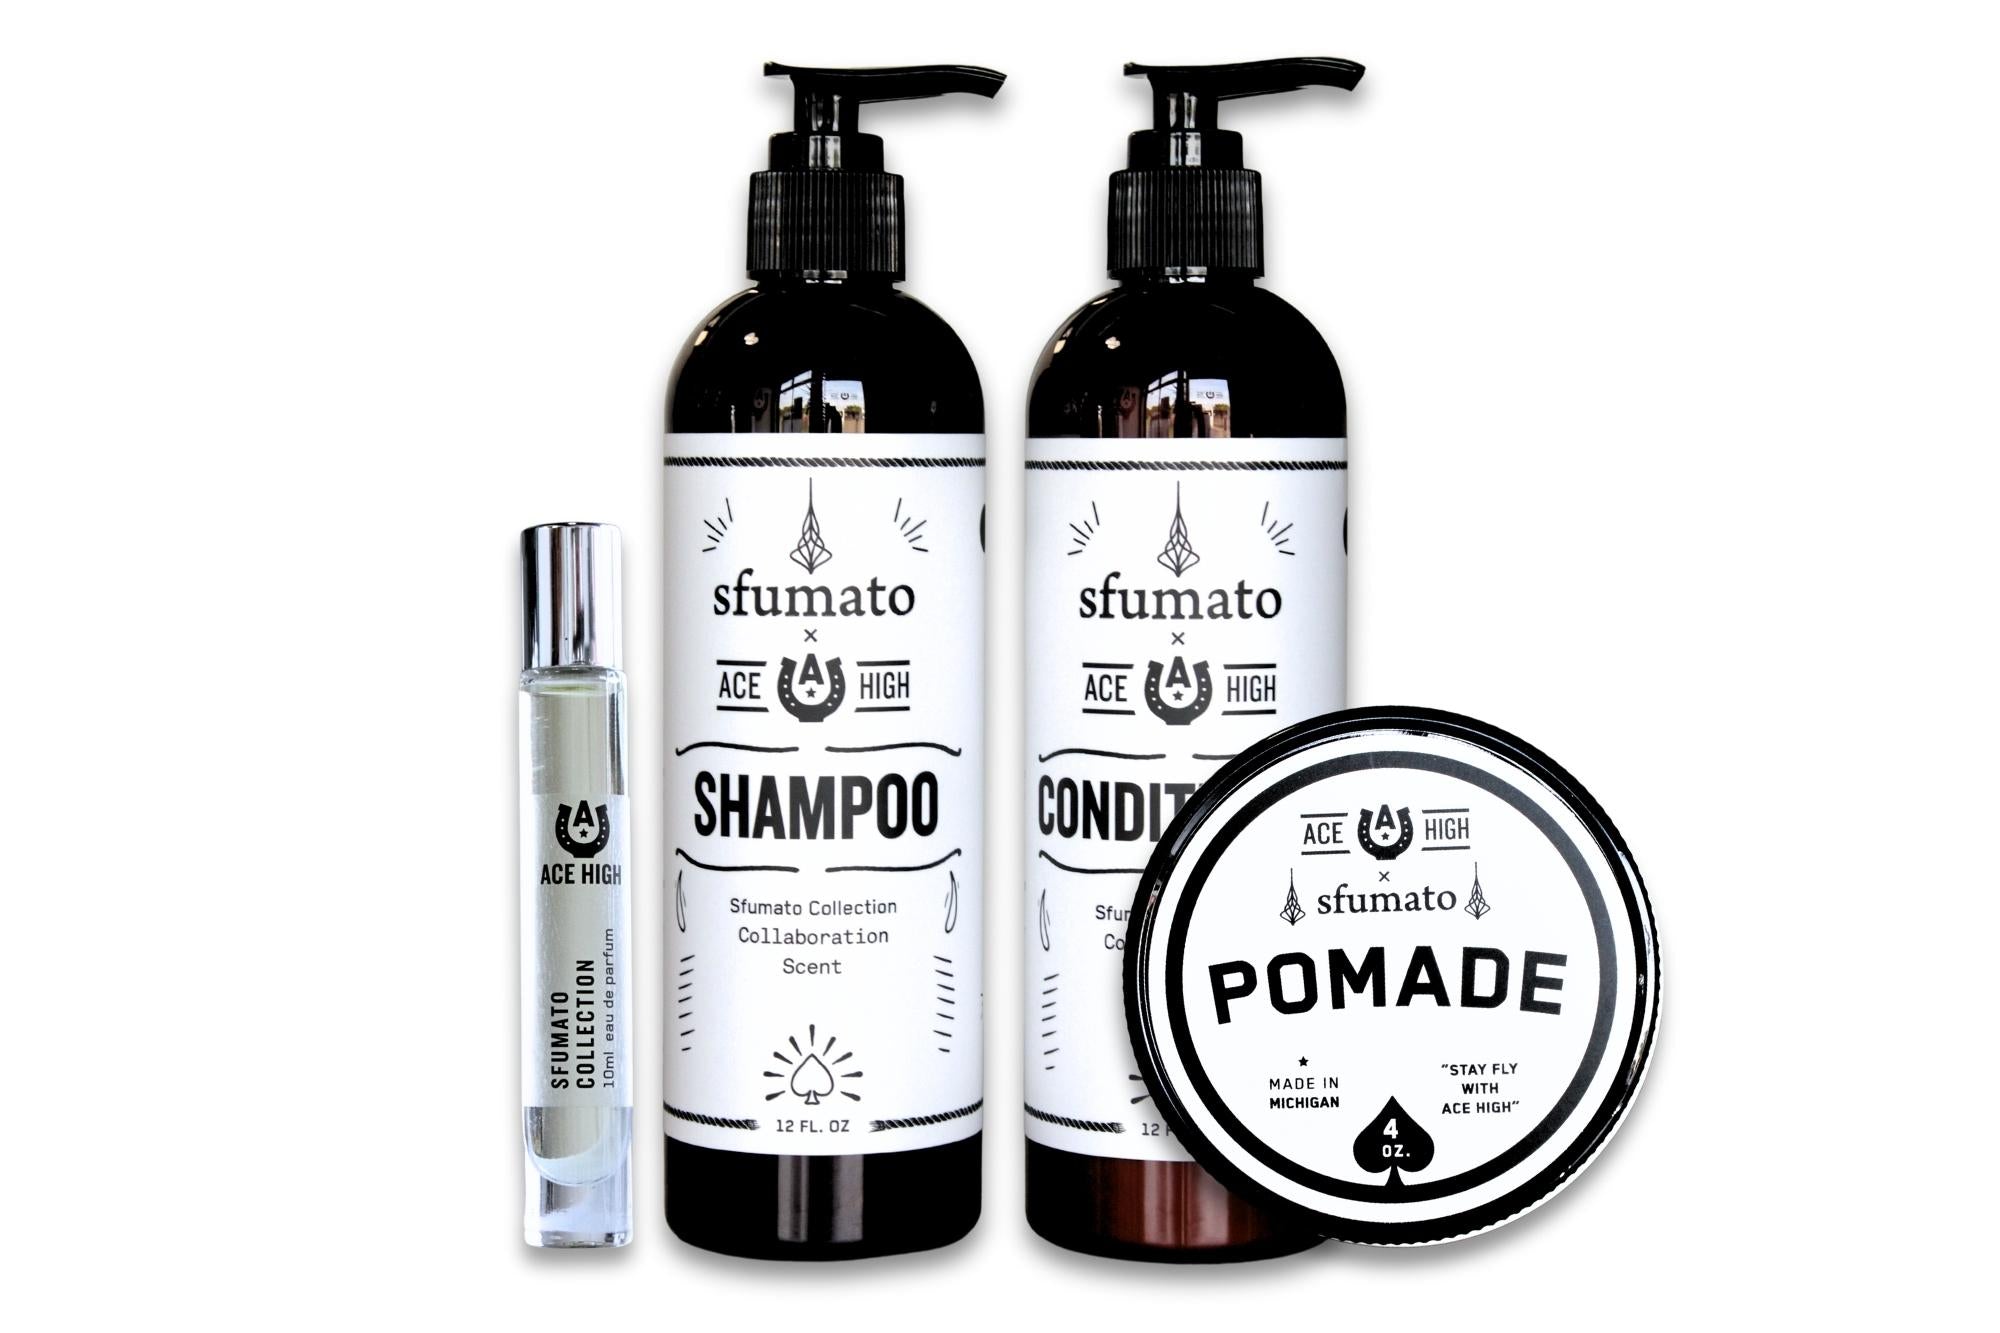 Sfumato Scented Pomade Shampoo Conditioner and Parfum